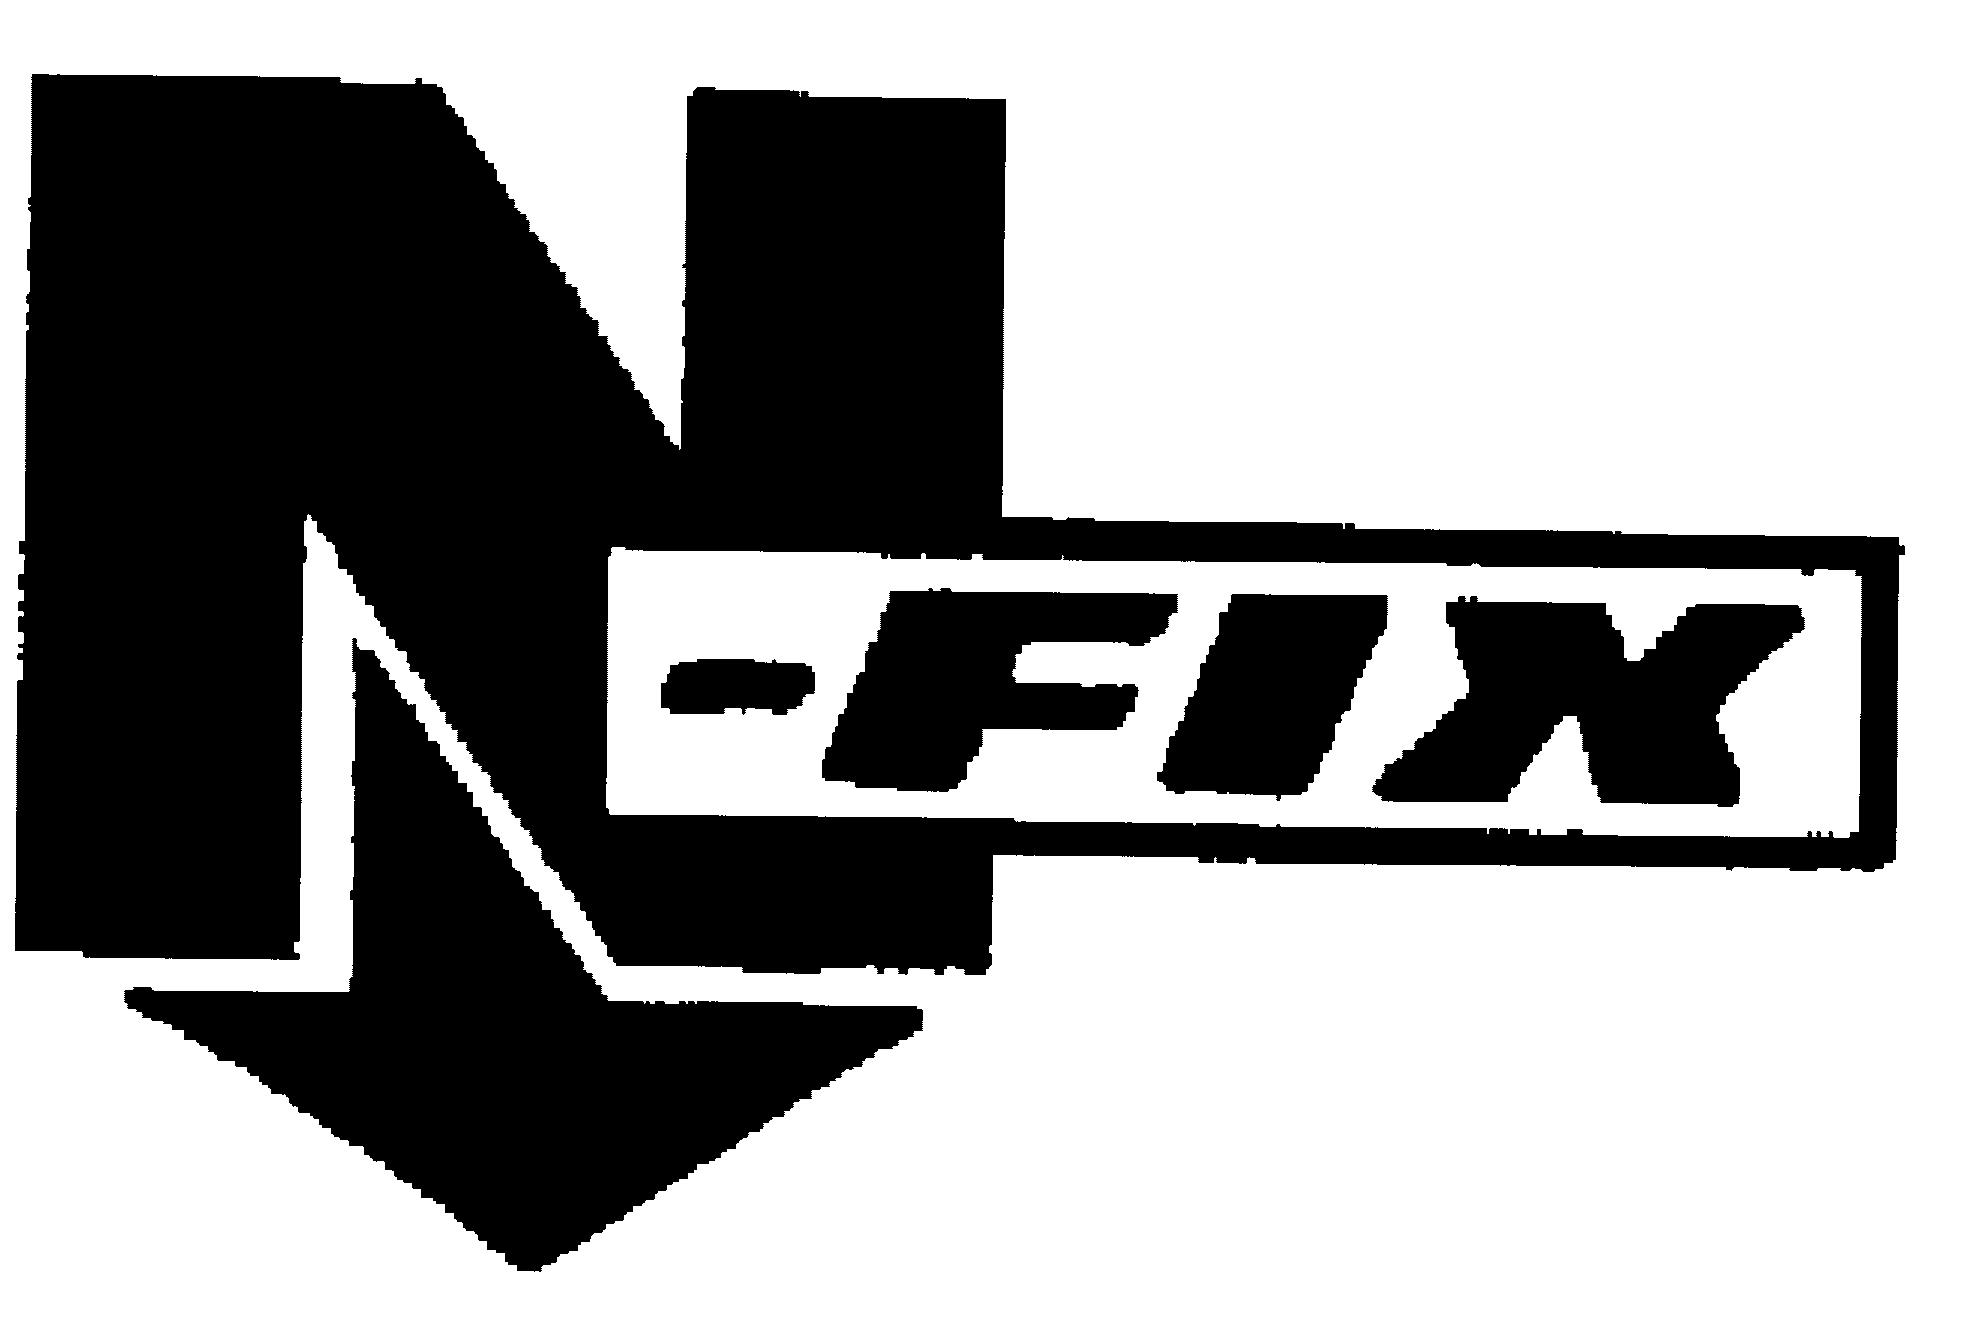 Trademark Logo N-FIX